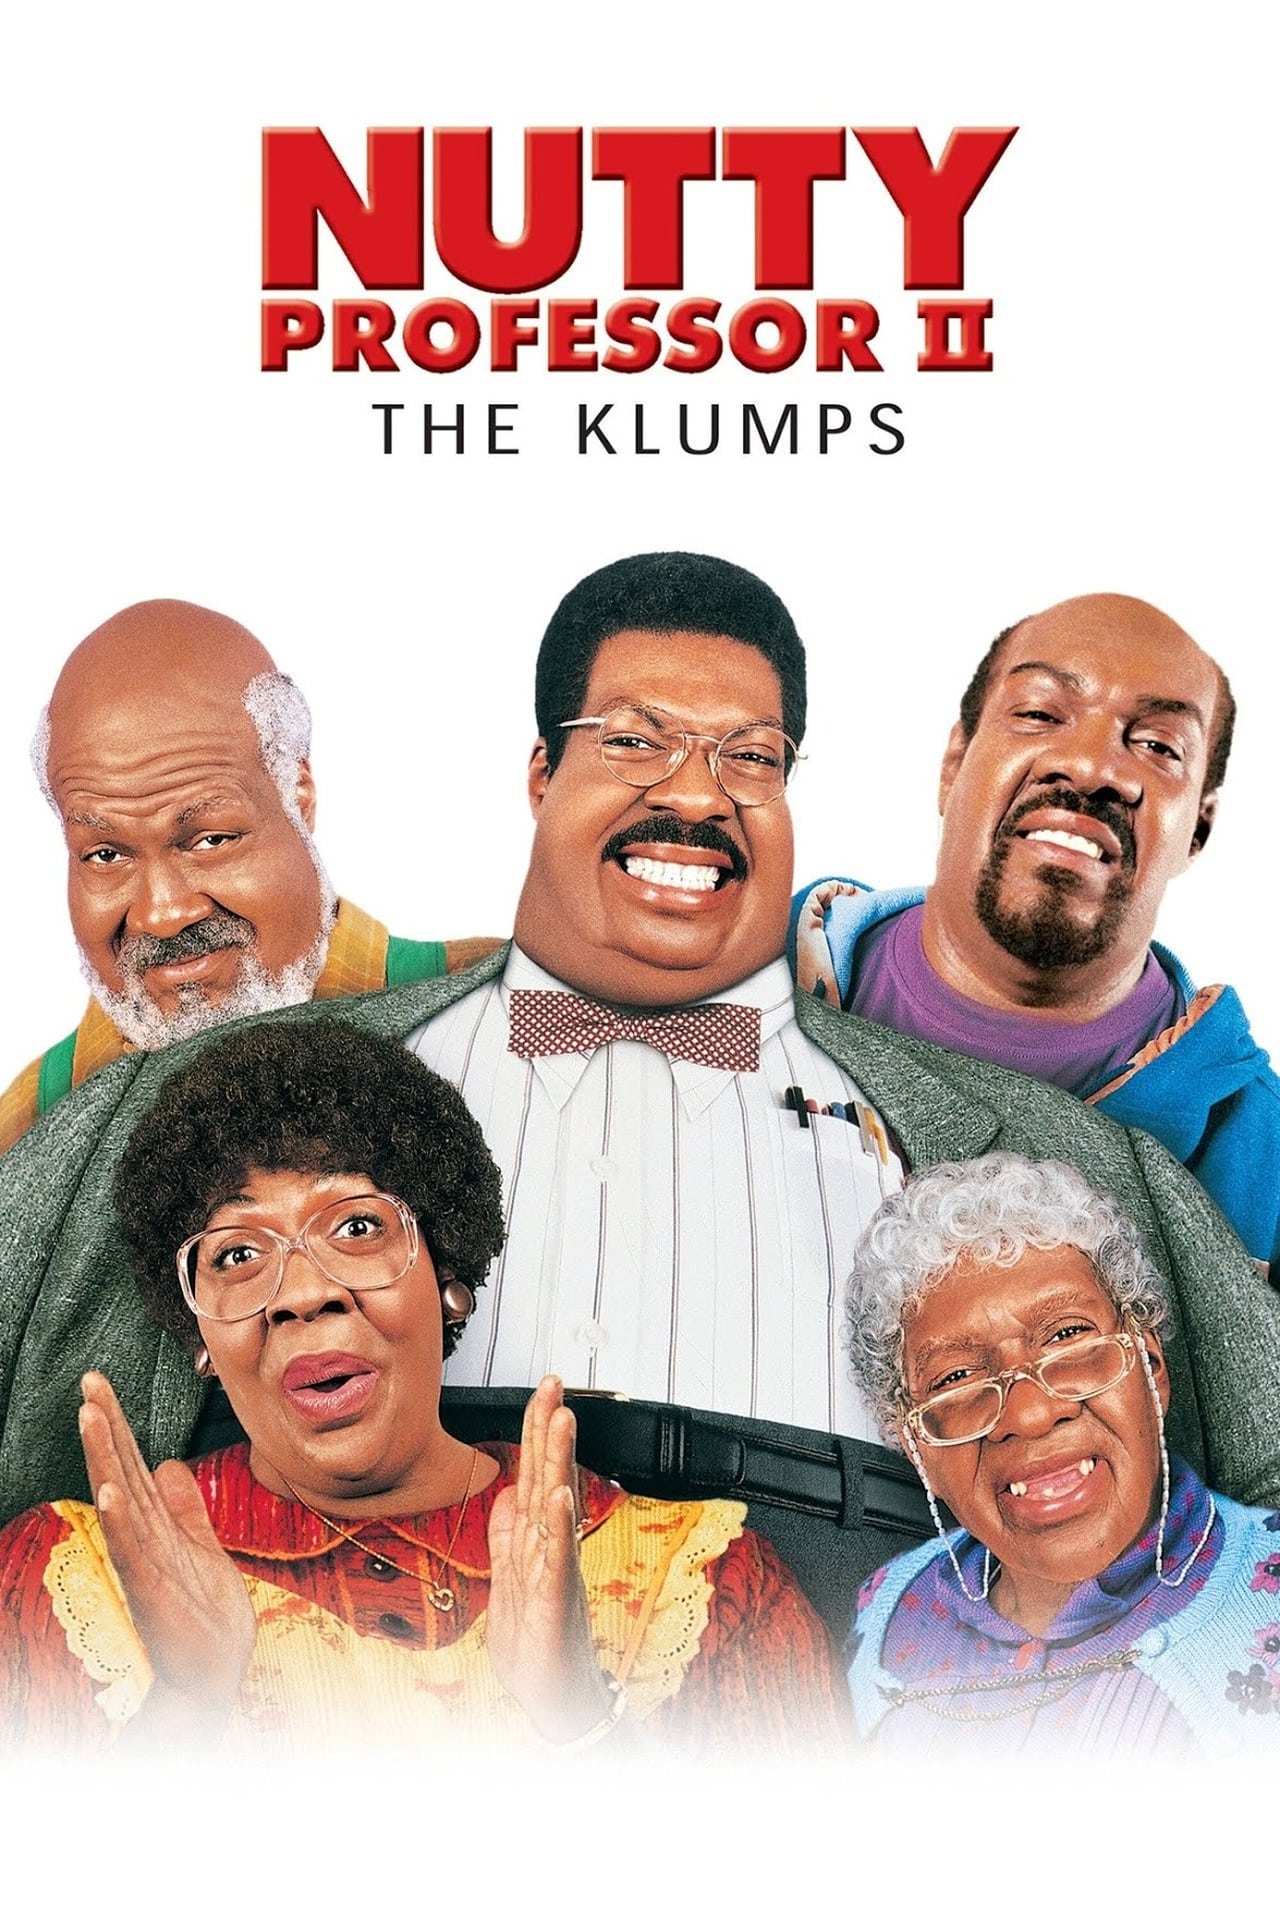 The Nutty Professor II: The Klumps on Netflix